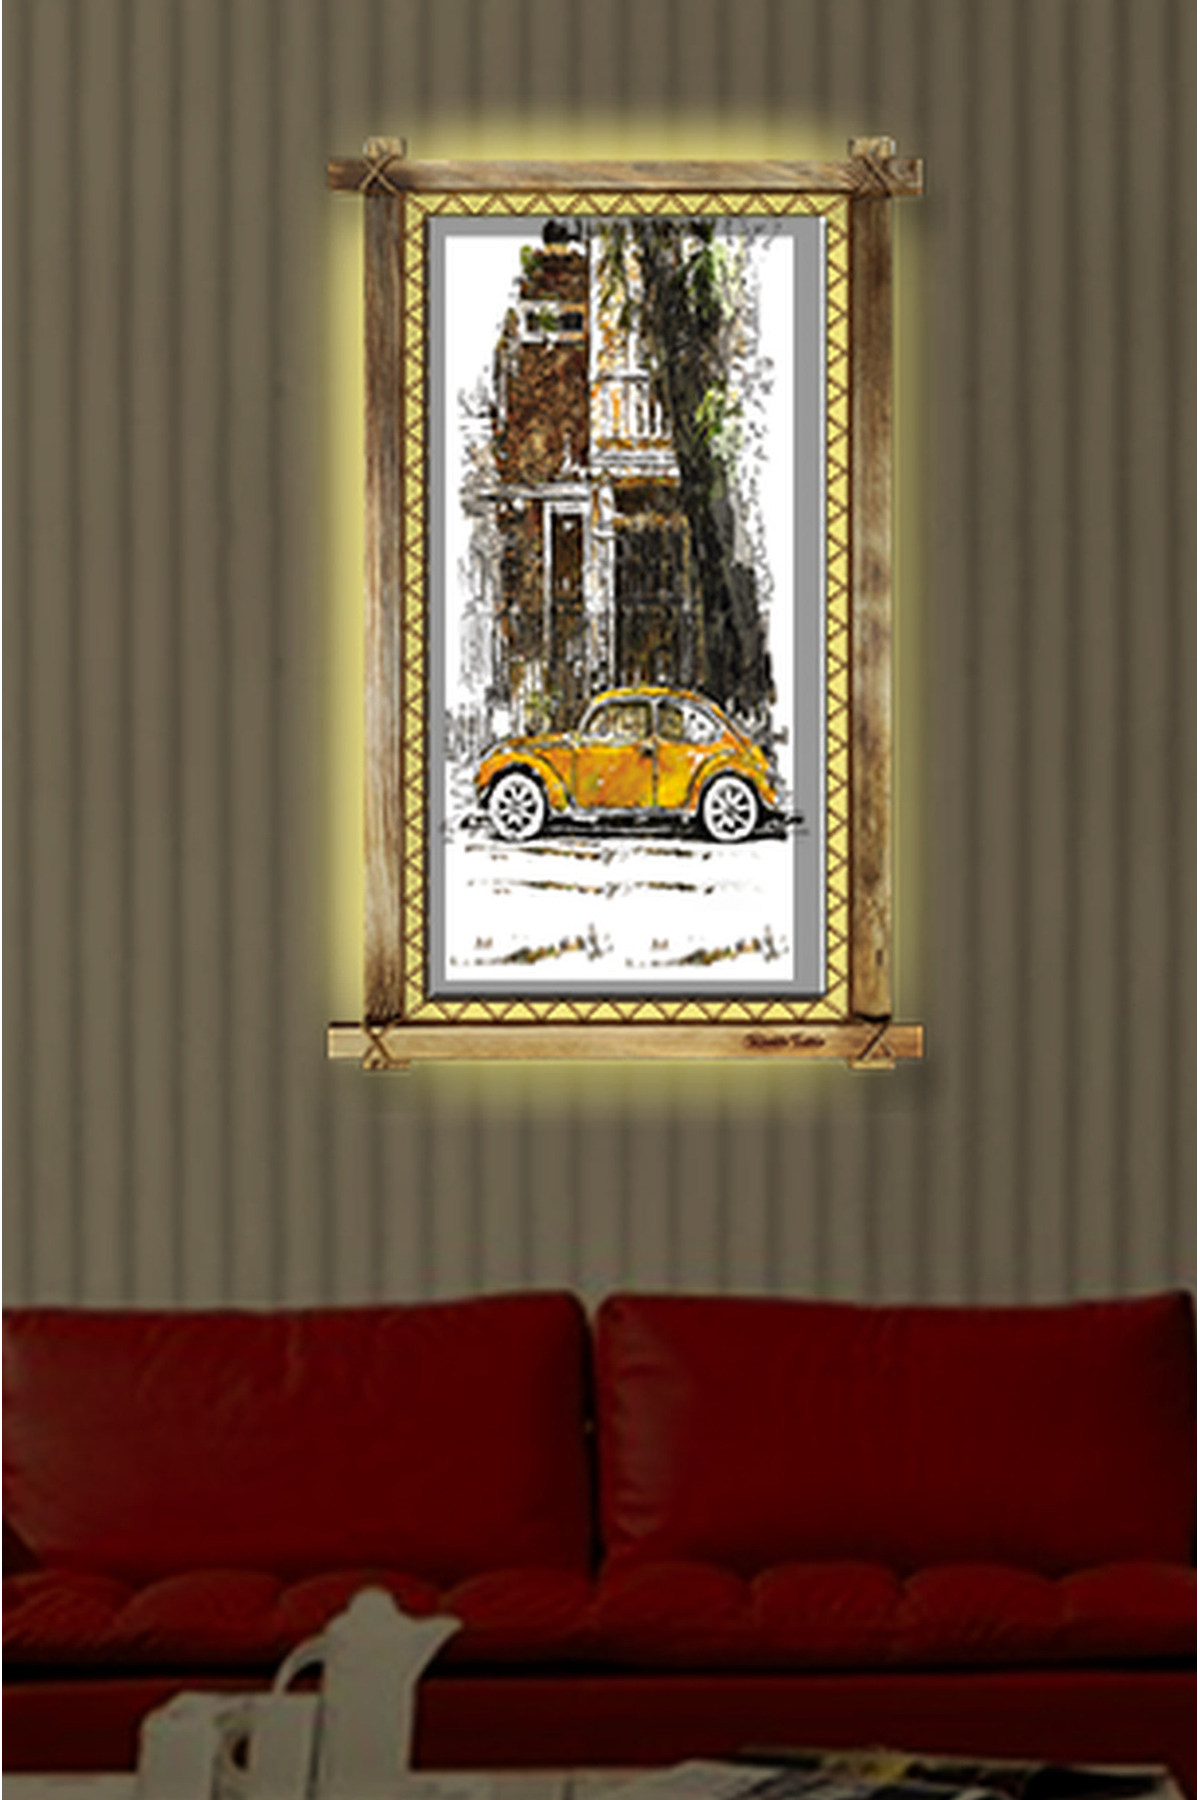 CLZ104 Sarı Araba  LED IŞIKLI RUSTİK kanvas tablo O  (96 x 56) cm